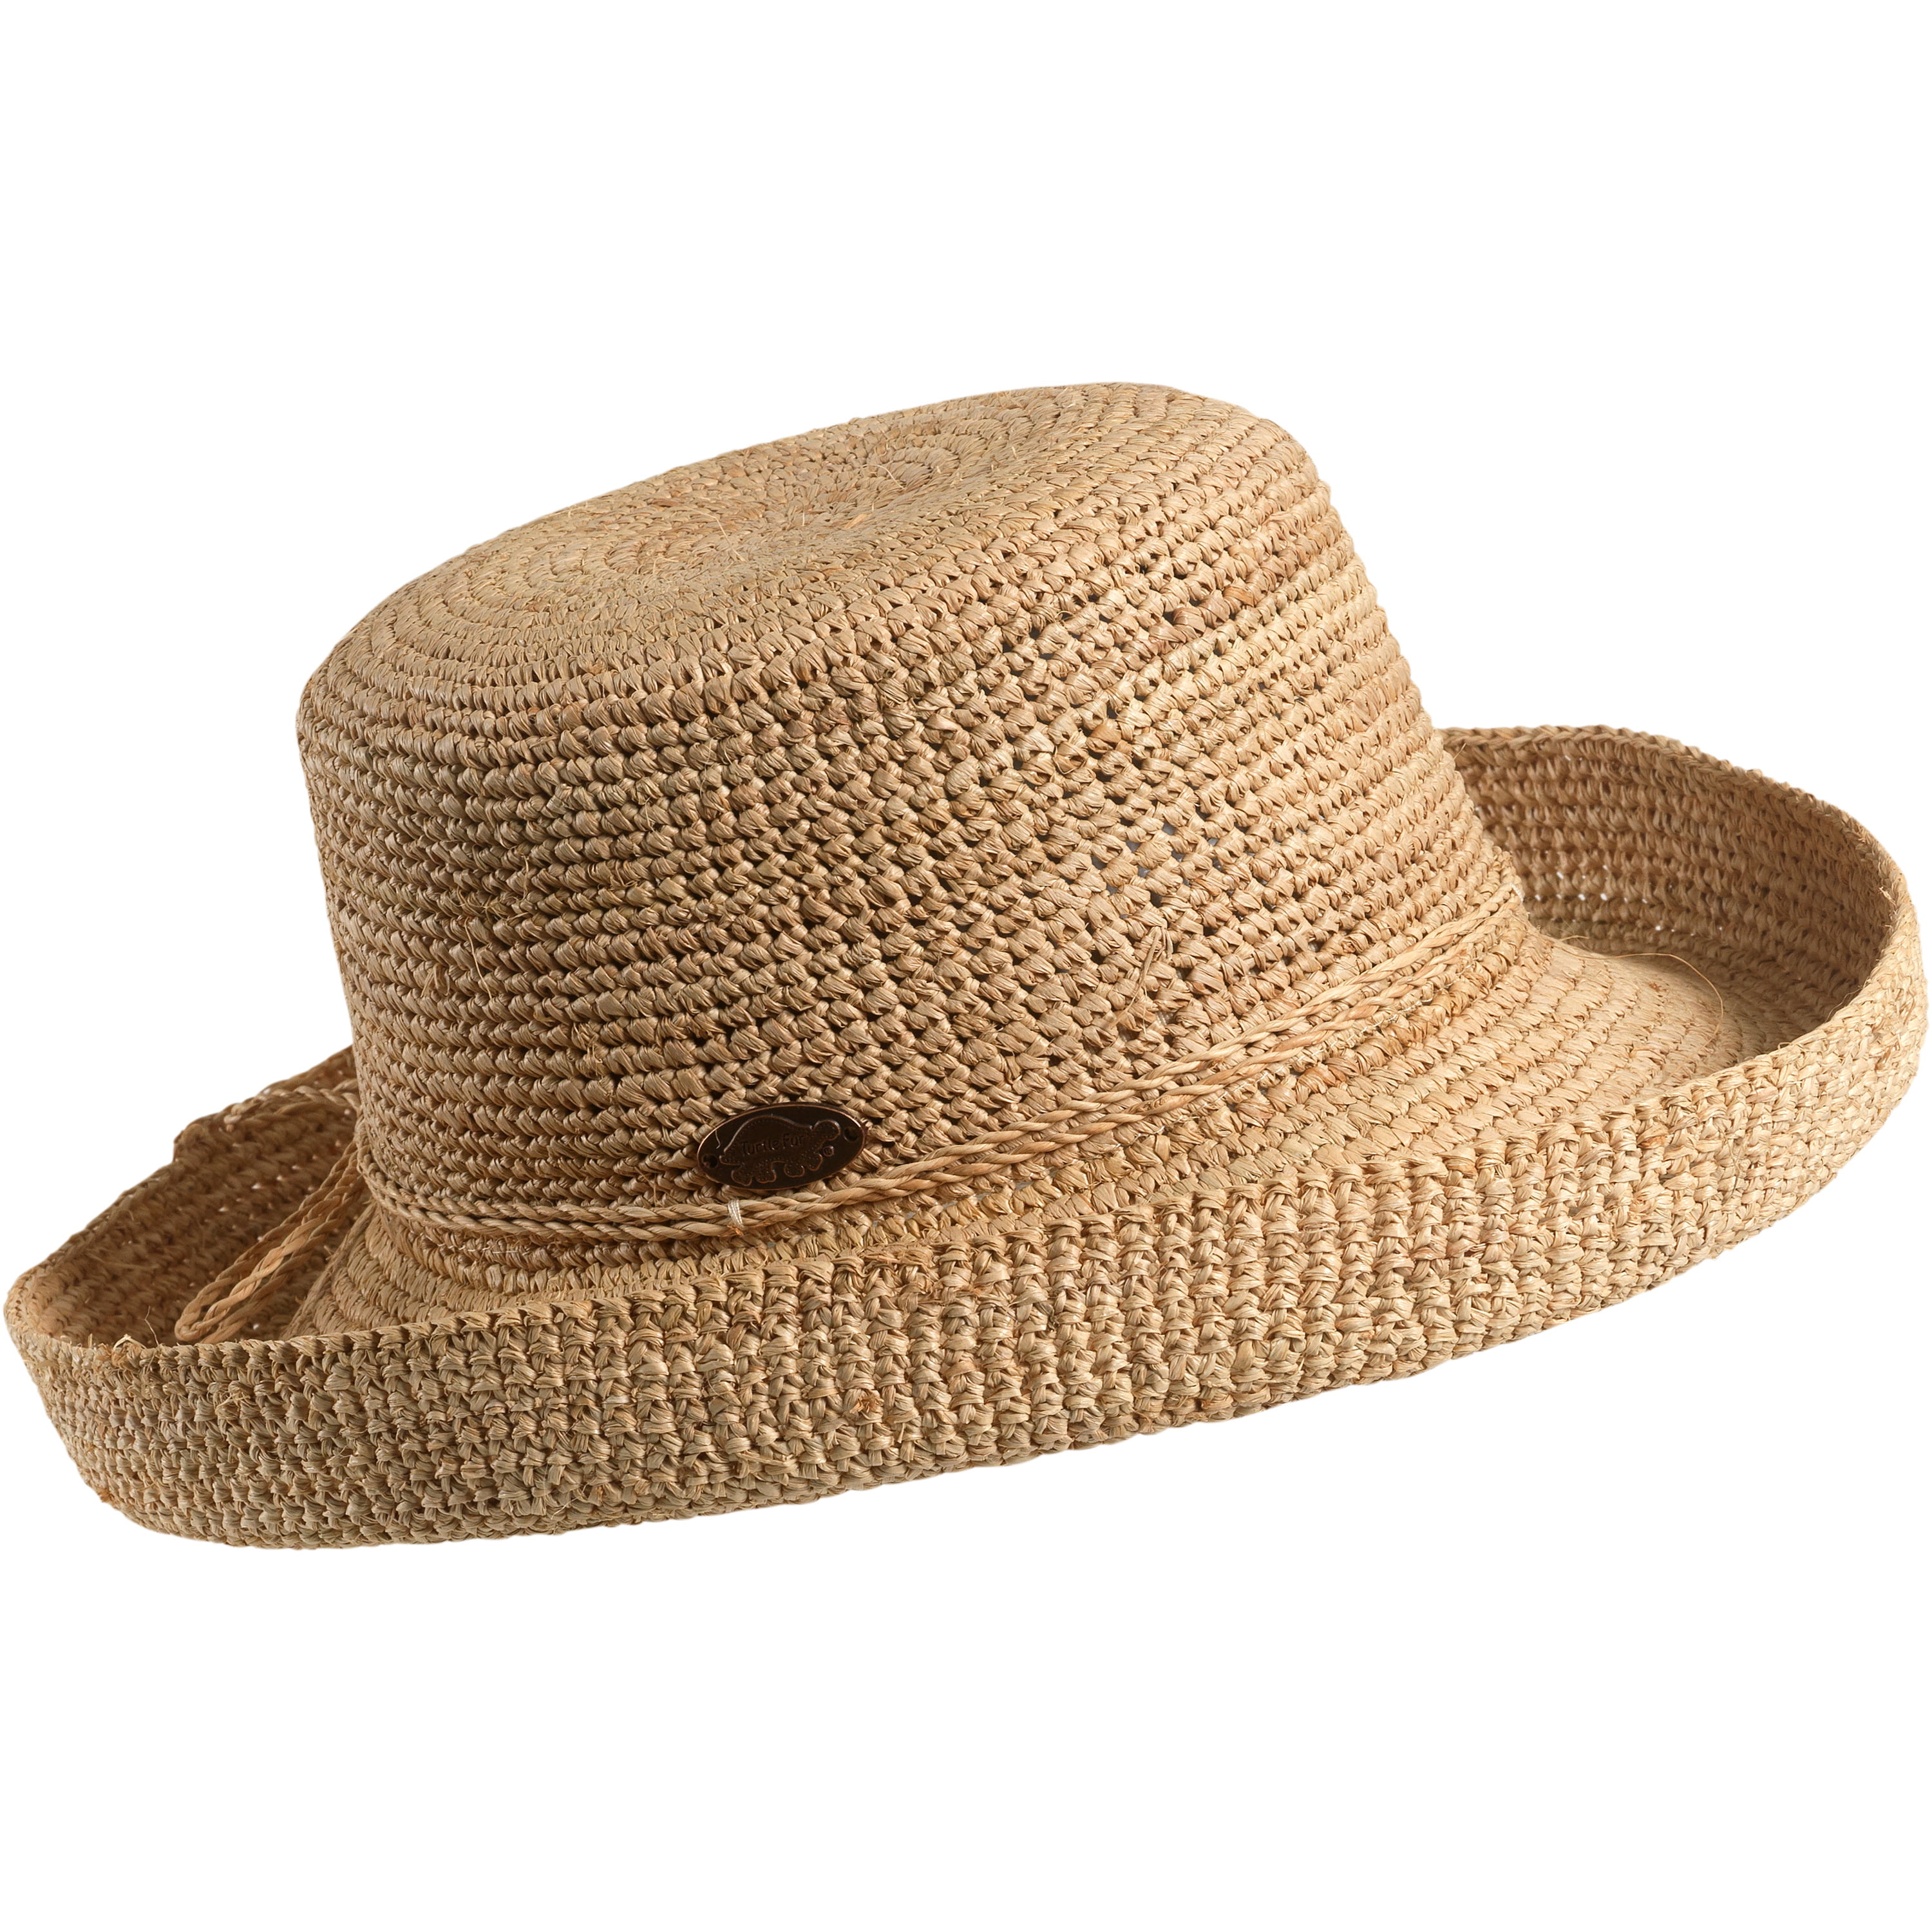 Корзина шляпа. Roeckl Straw hat. Straw hat. Australian Straw hat.